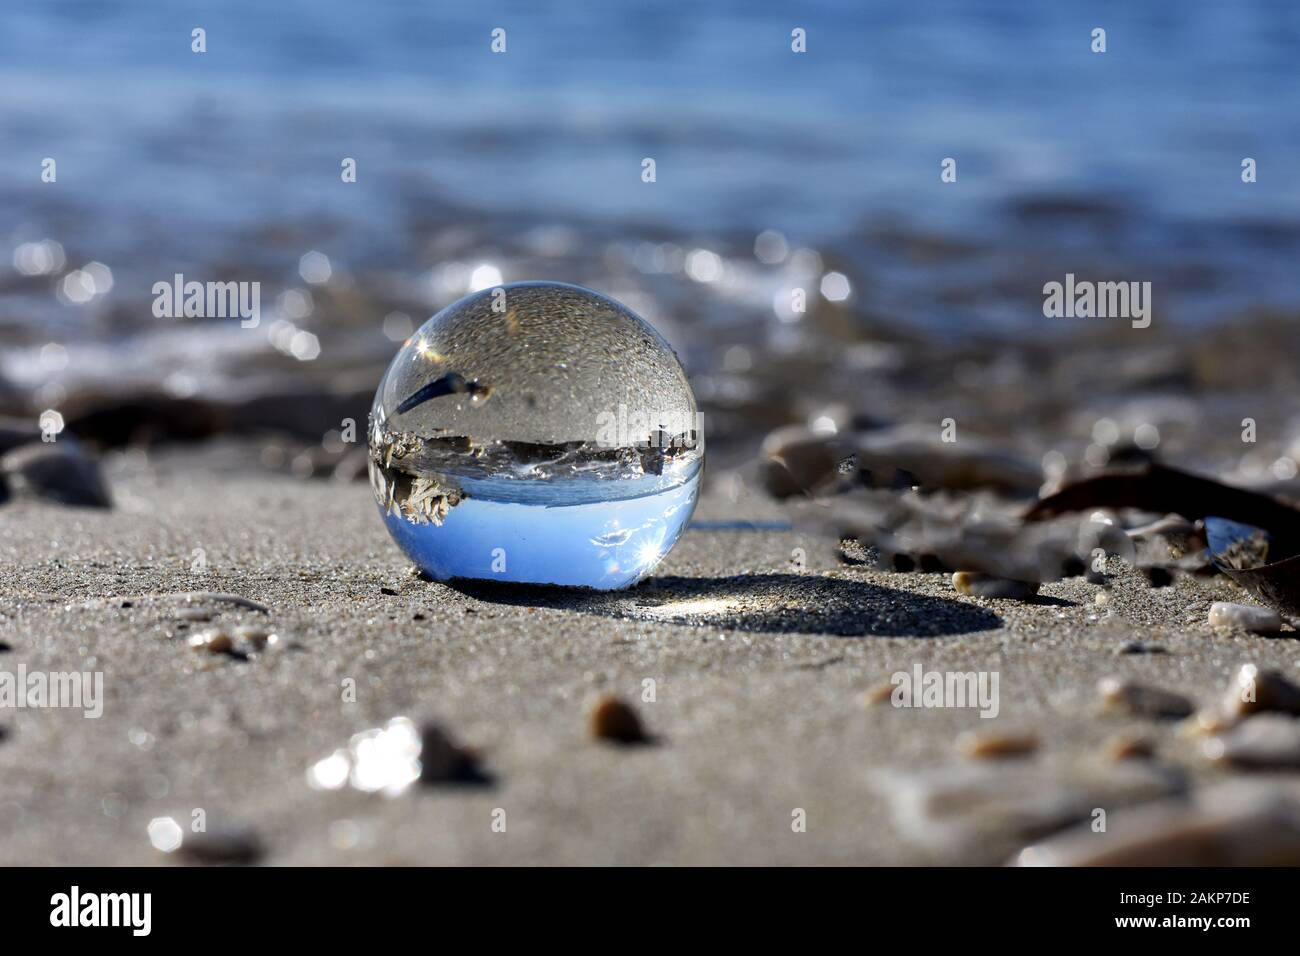 https://c8.alamy.com/comp/2AKP7DE/beautiful-transparent-glass-balls-at-the-beach-flips-the-view-upside-down-beautiful-landscape-nature-photography-2AKP7DE.jpg